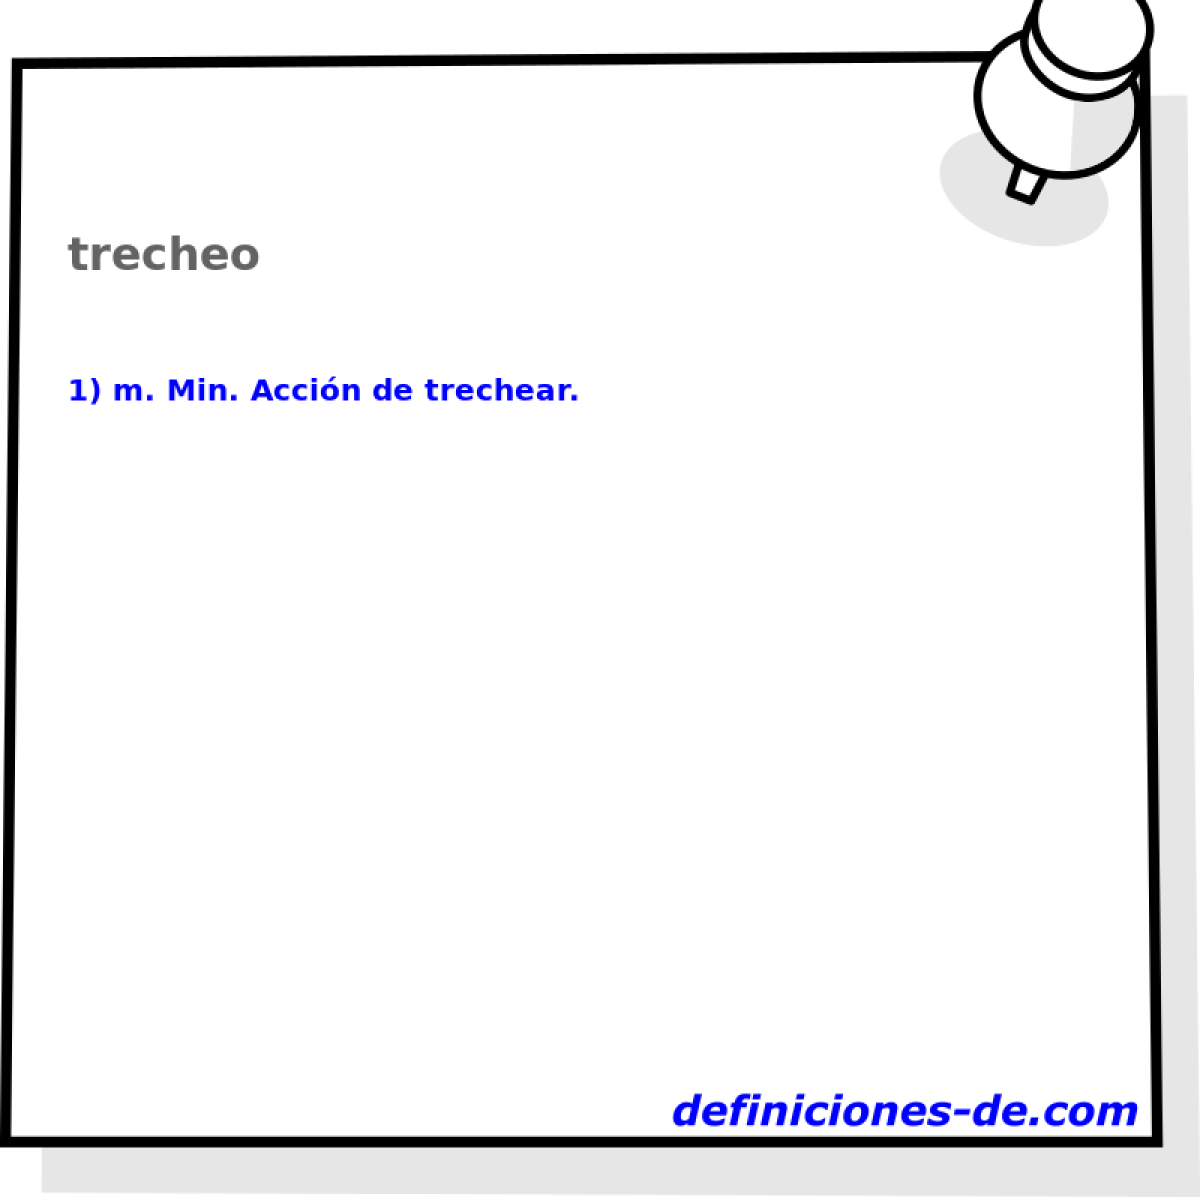 trecheo 